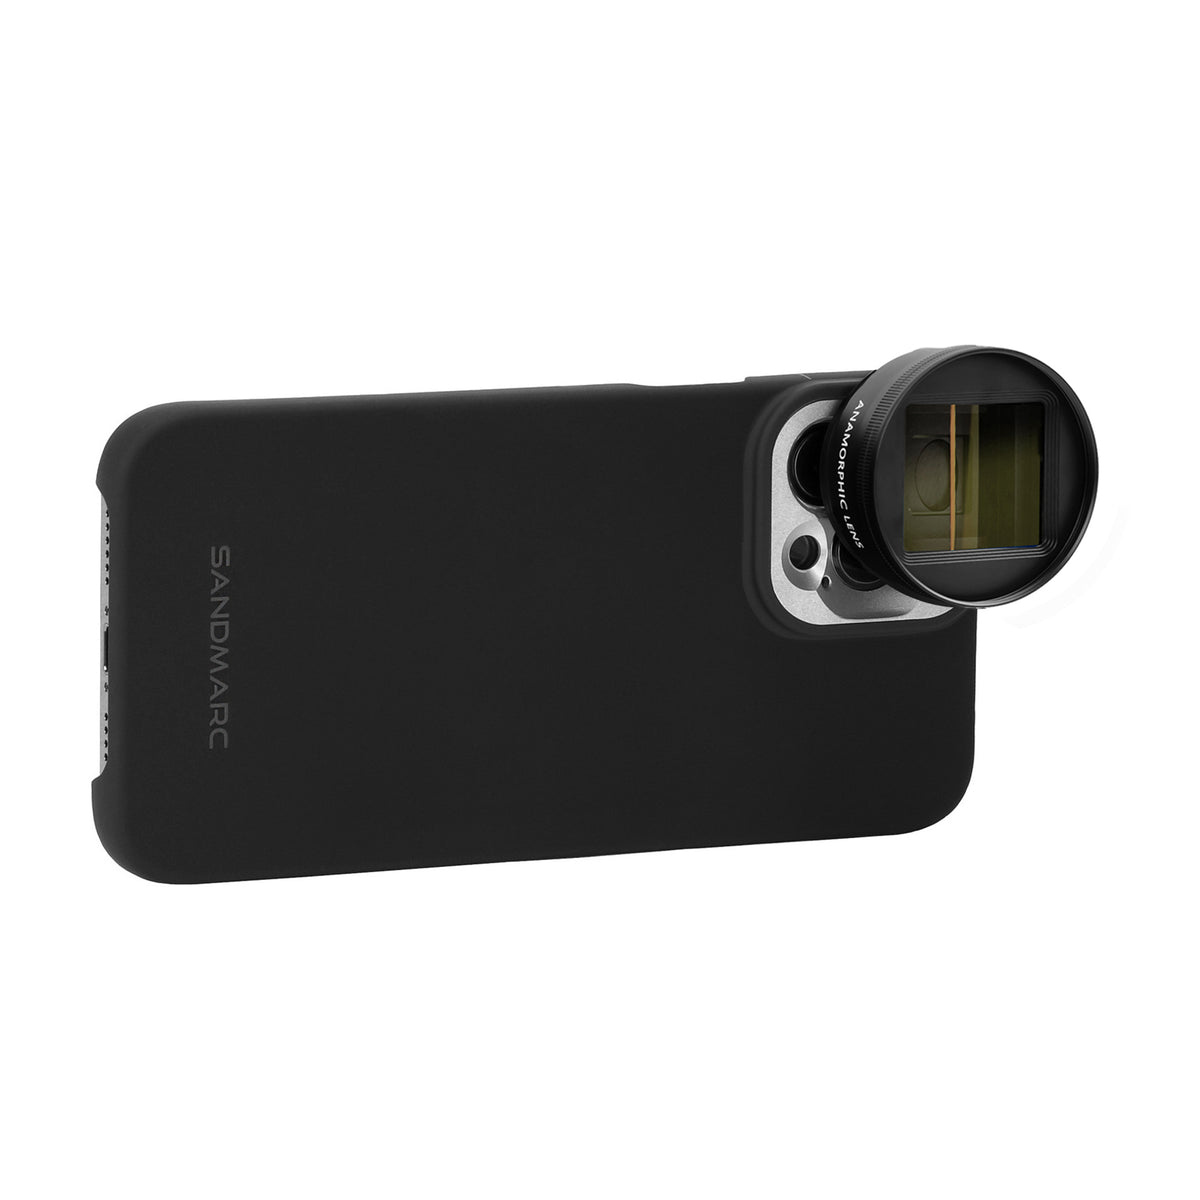 Anamorphic Lens Edition - iPhone 12 Pro Max - SANDMARC #type_anamorphic 1.33x